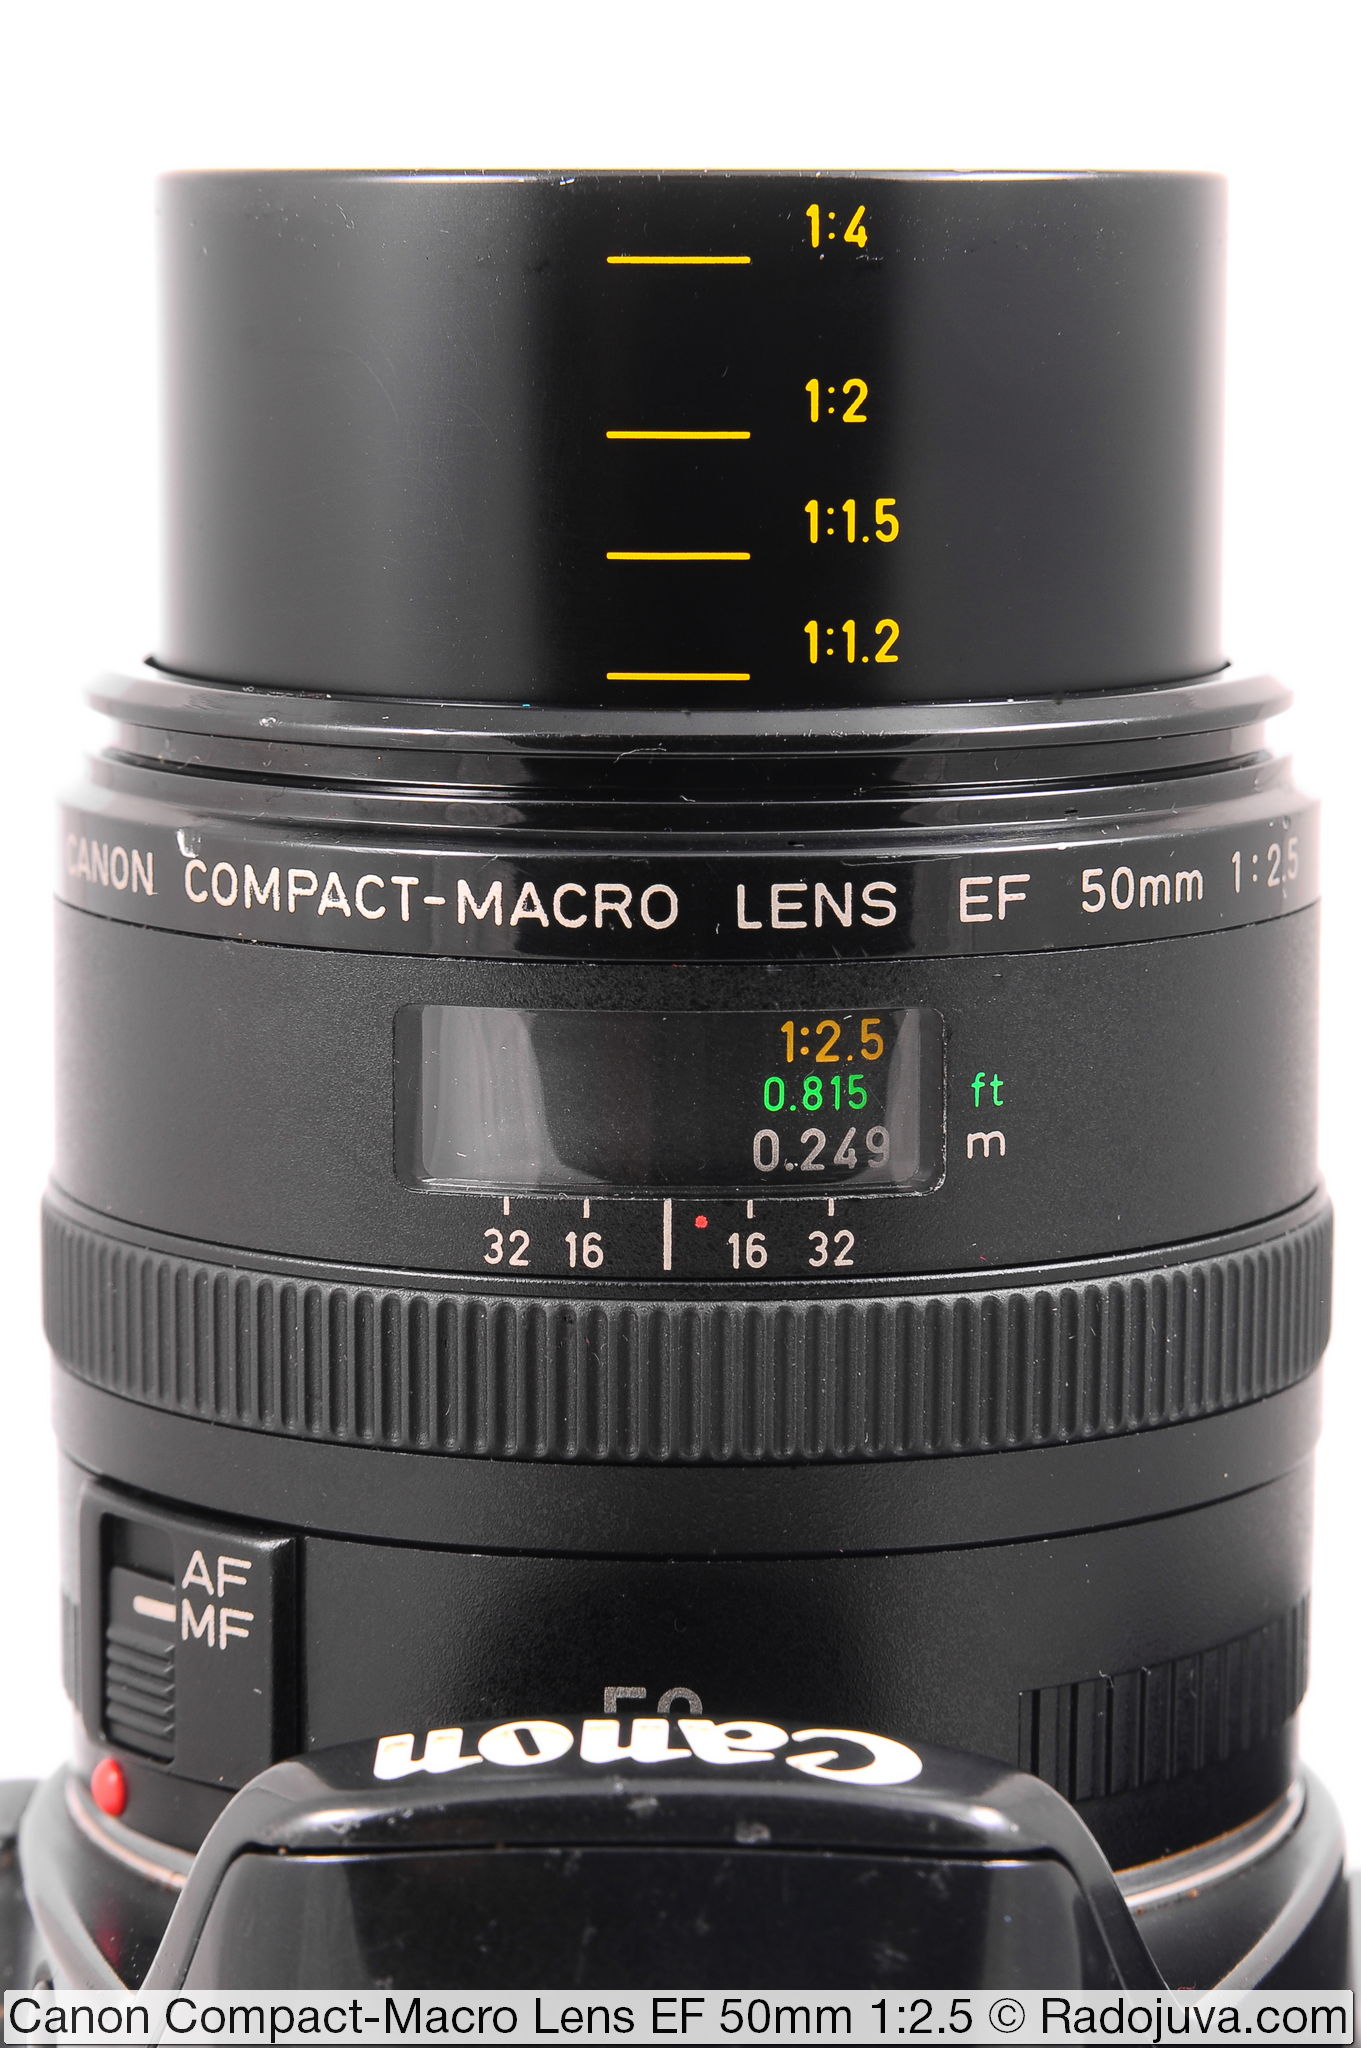 Canon Compact-Macro Lens EF 50mm 1:2.5